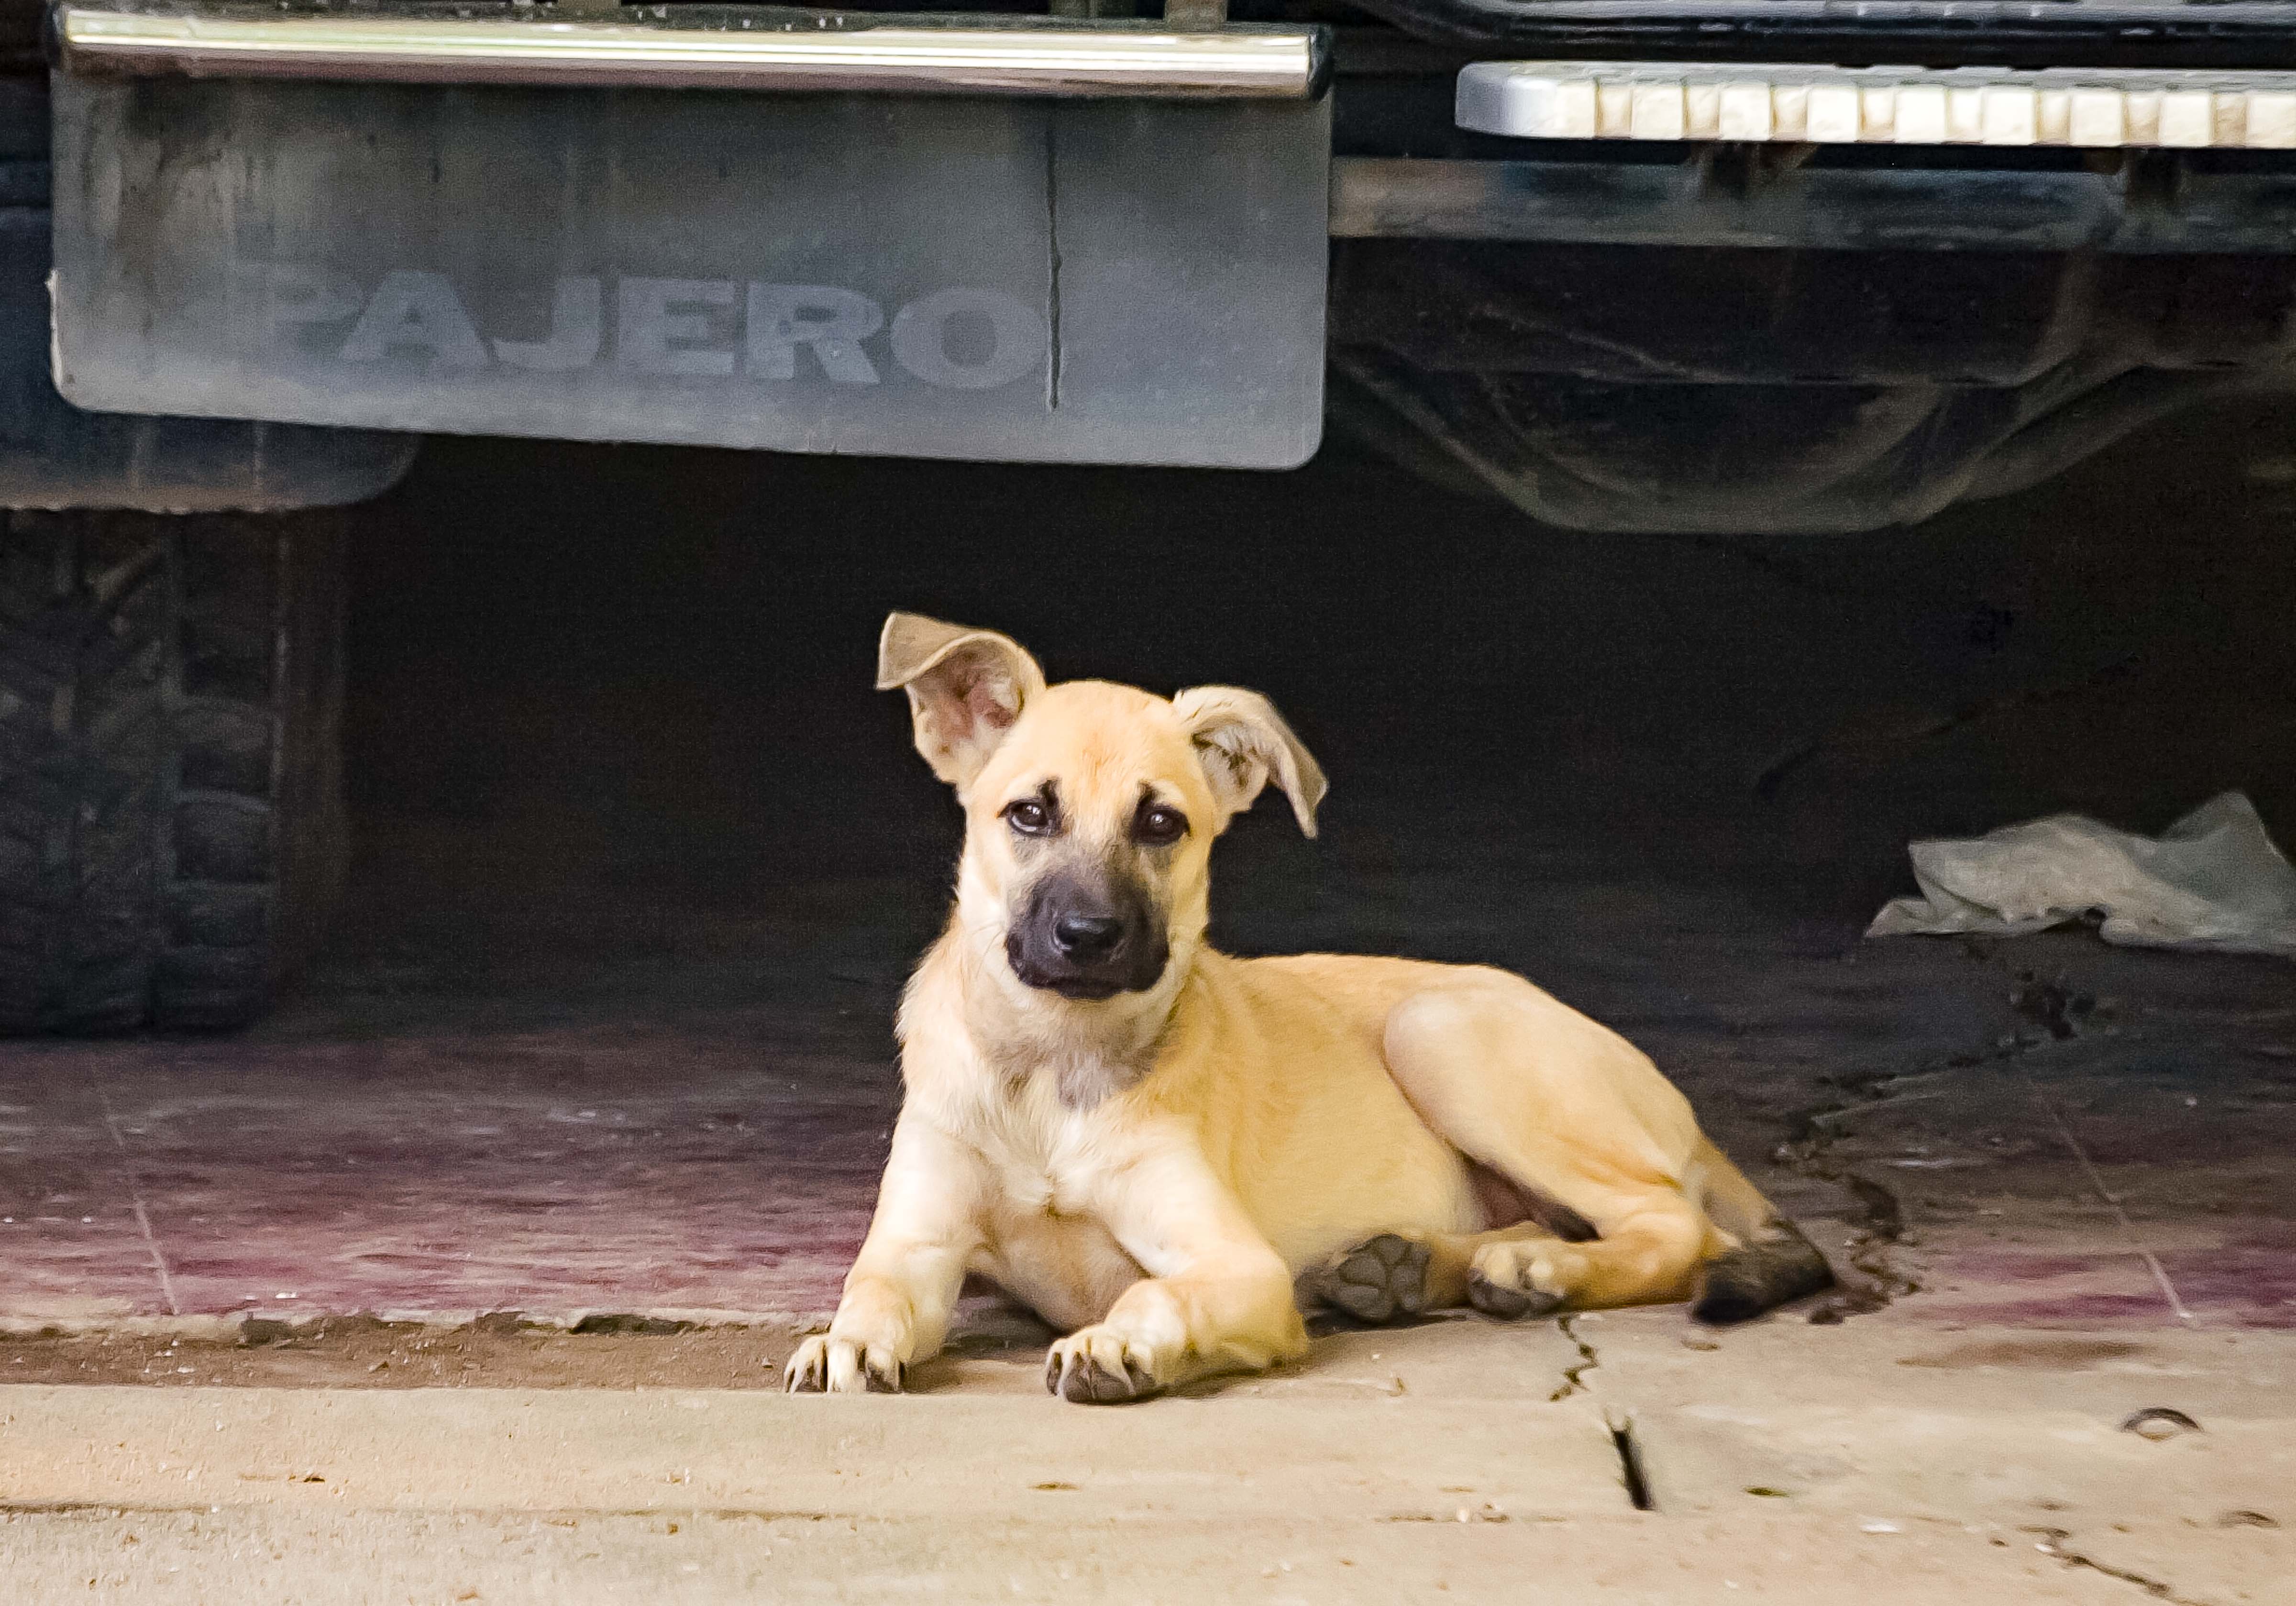 Philippines-Bataan Dog And Car, 2007